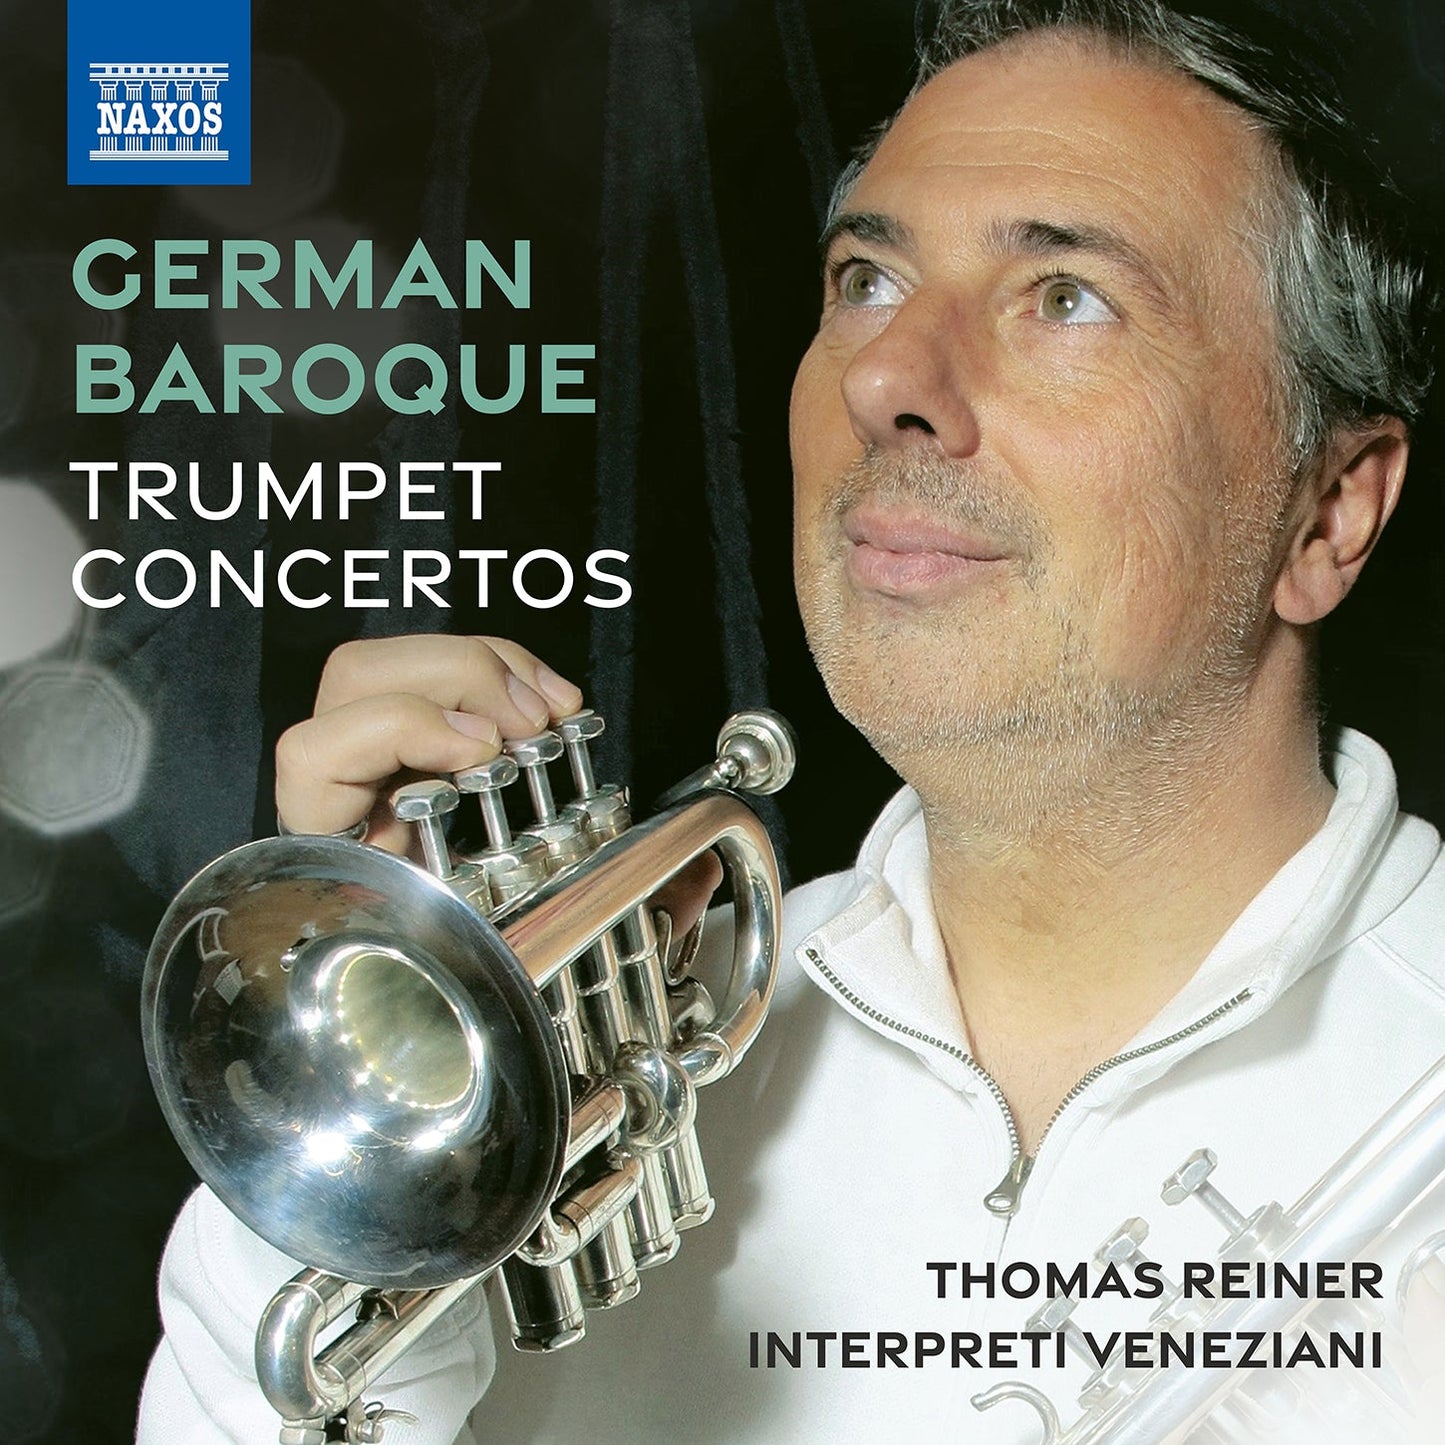 Fasch, Stolzel & Telemann: German Baroque Trumpet Concertos